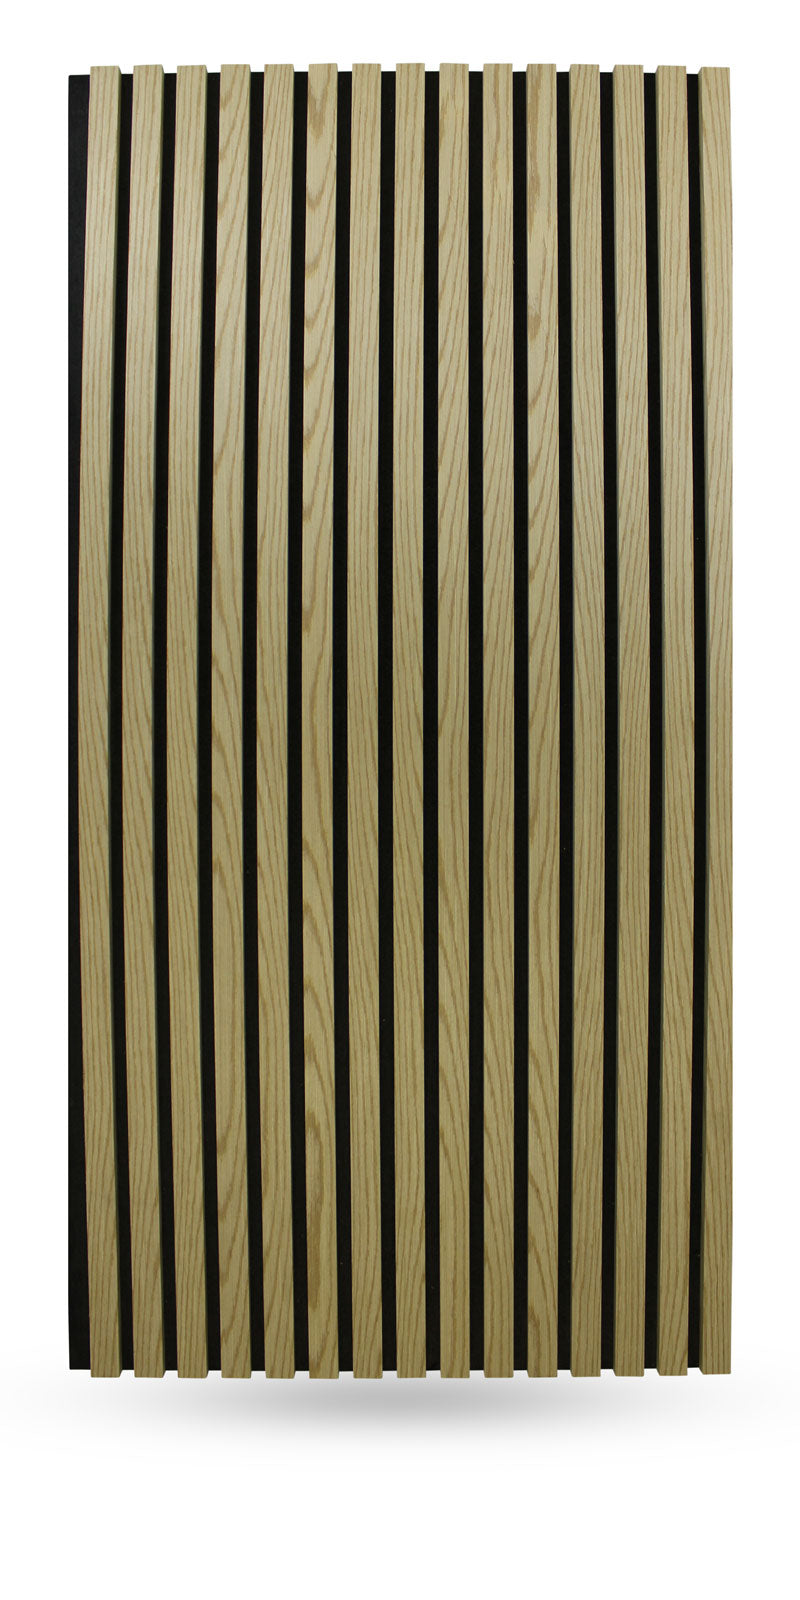 White Oak Acoustic Wall Panels Real Wood Veneer Three-Sided Slats